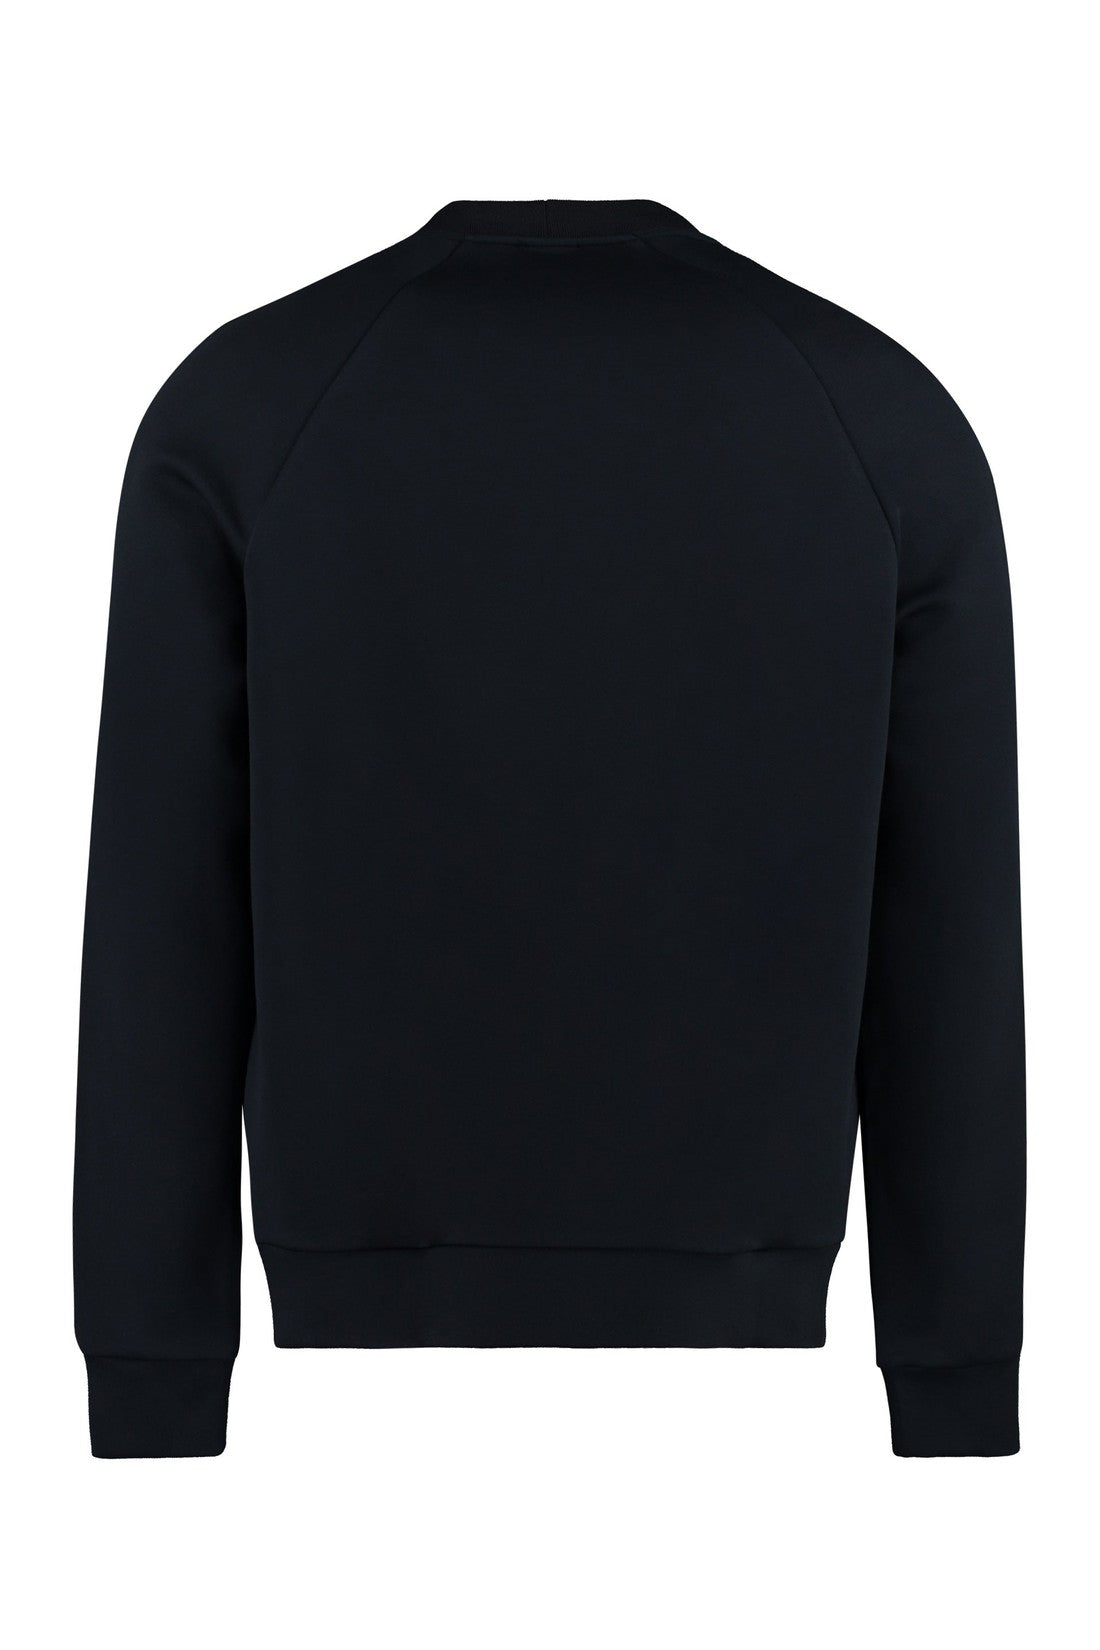 Giorgio Armani-OUTLET-SALE-Embroidered logo crew-neck sweatshirt-ARCHIVIST